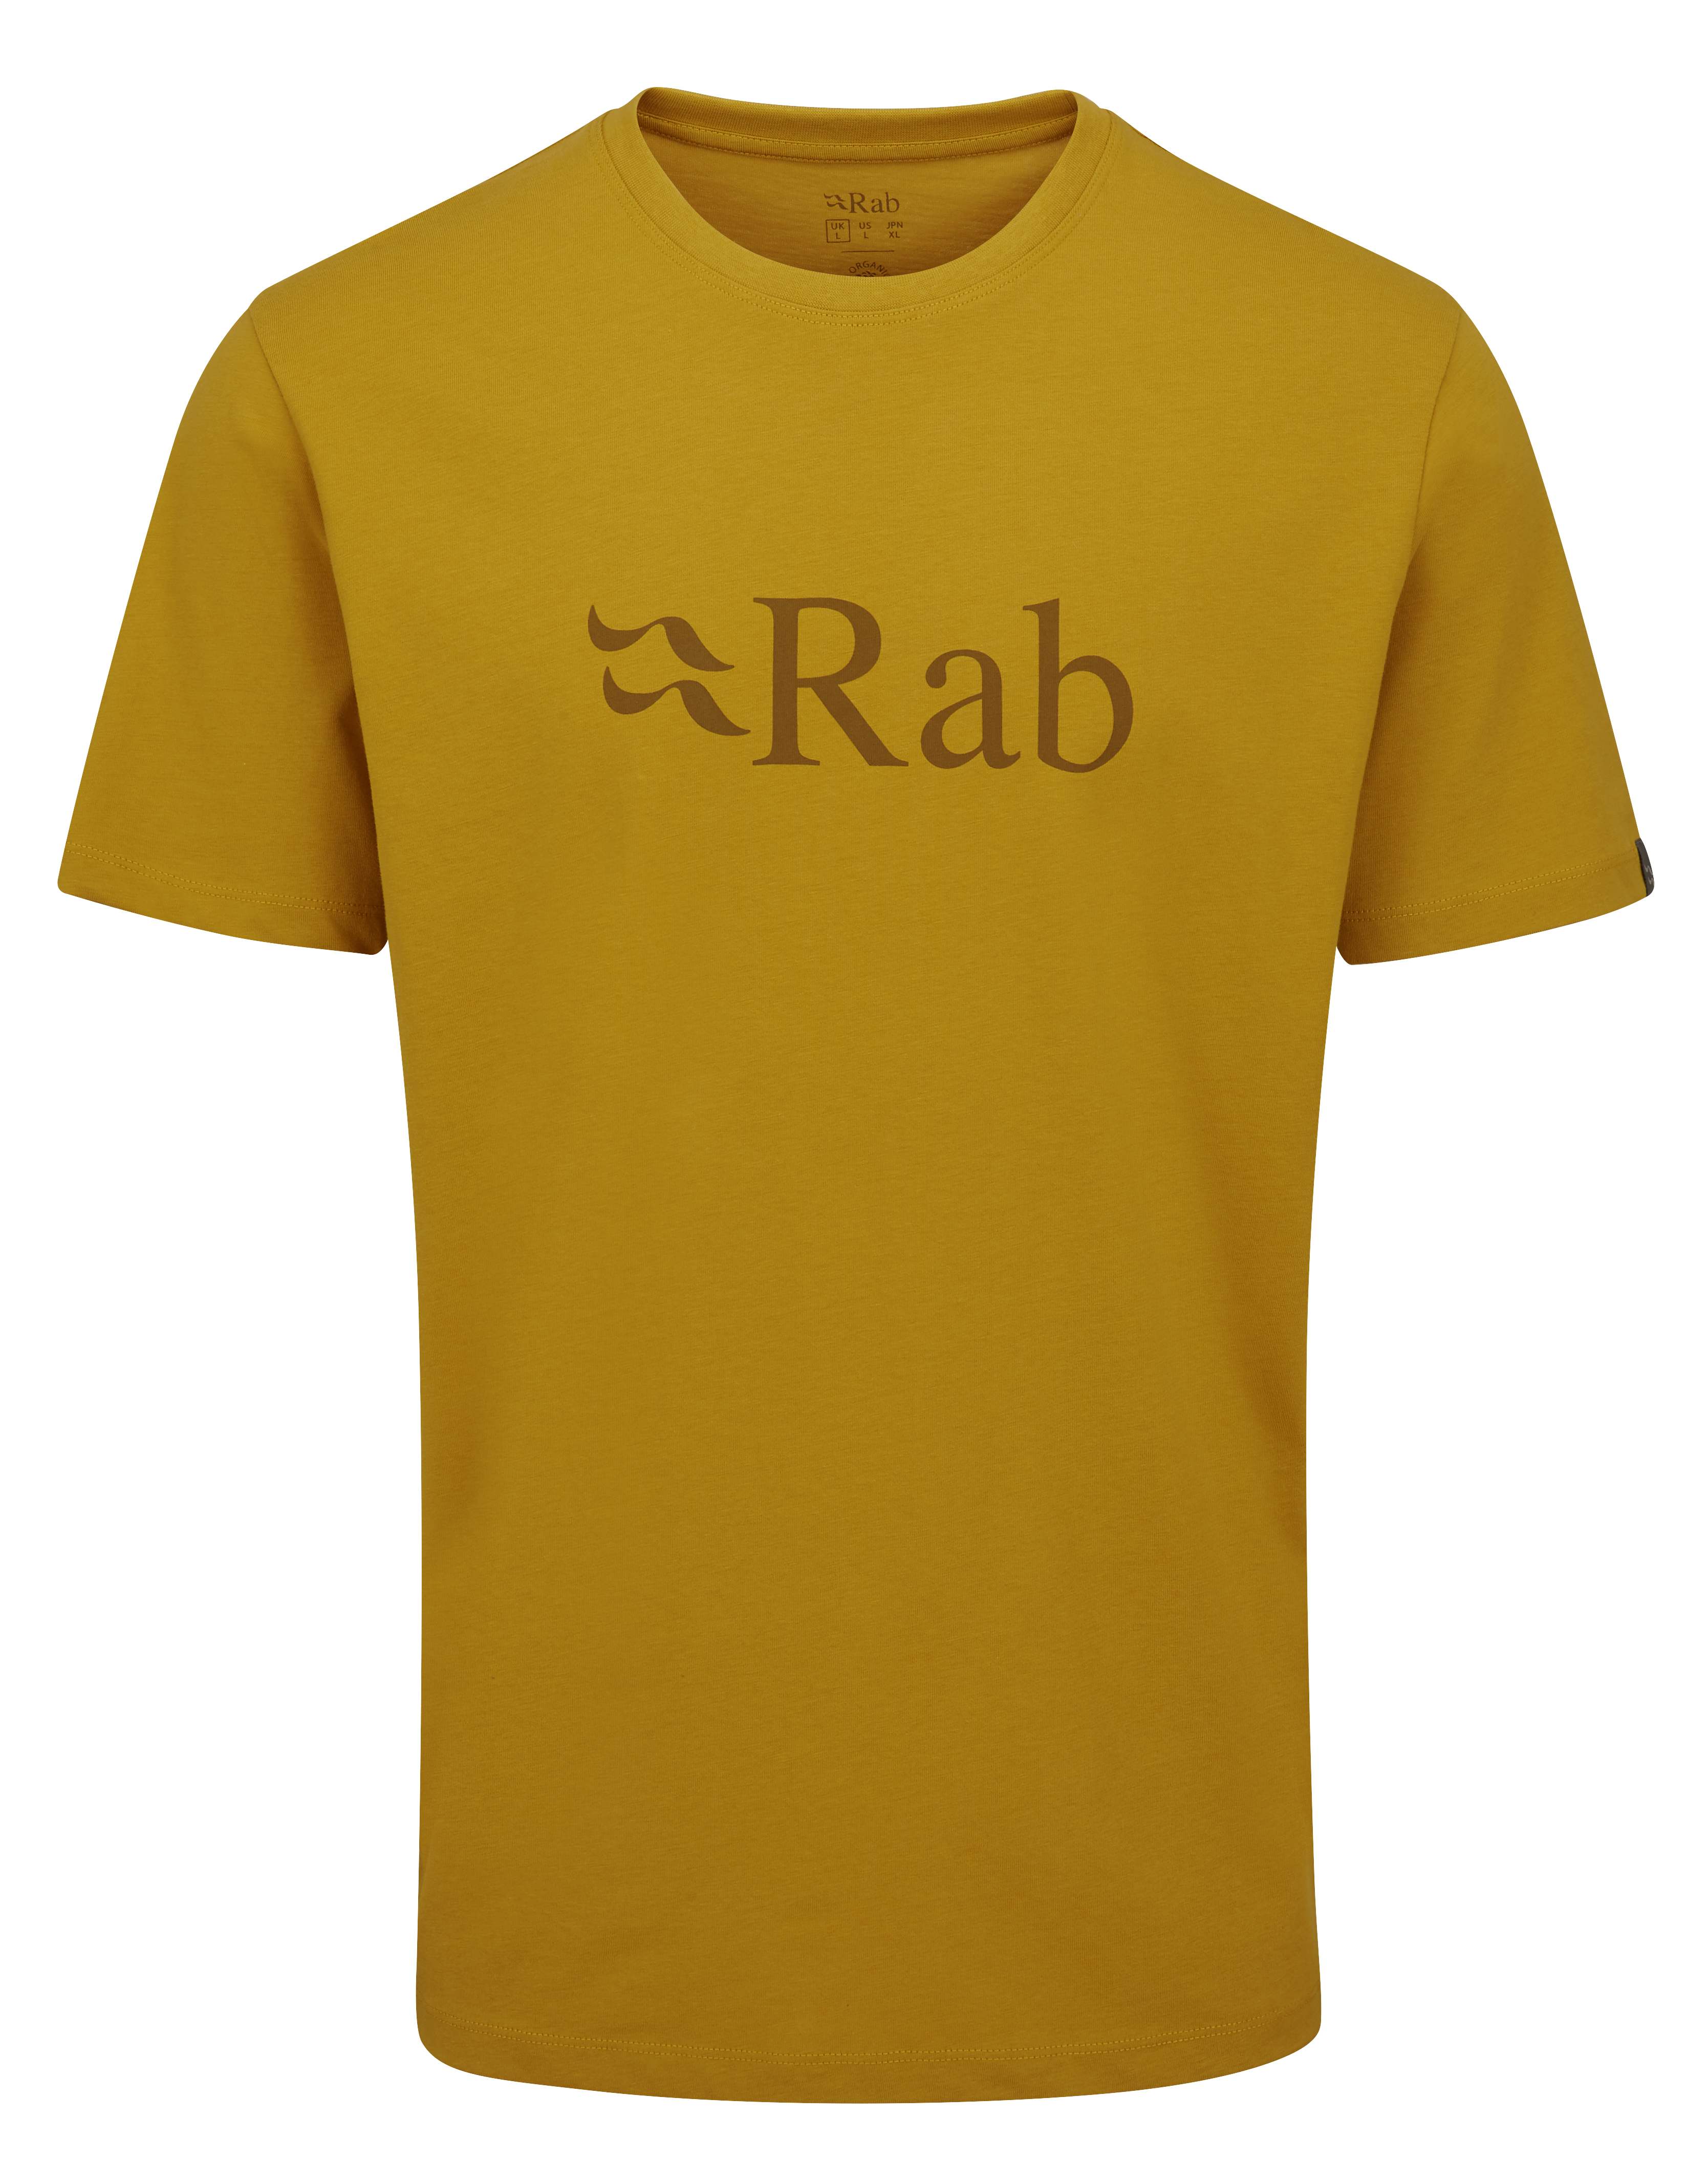 Rab - Stance Logo SS Tee - Camiseta - Hombre